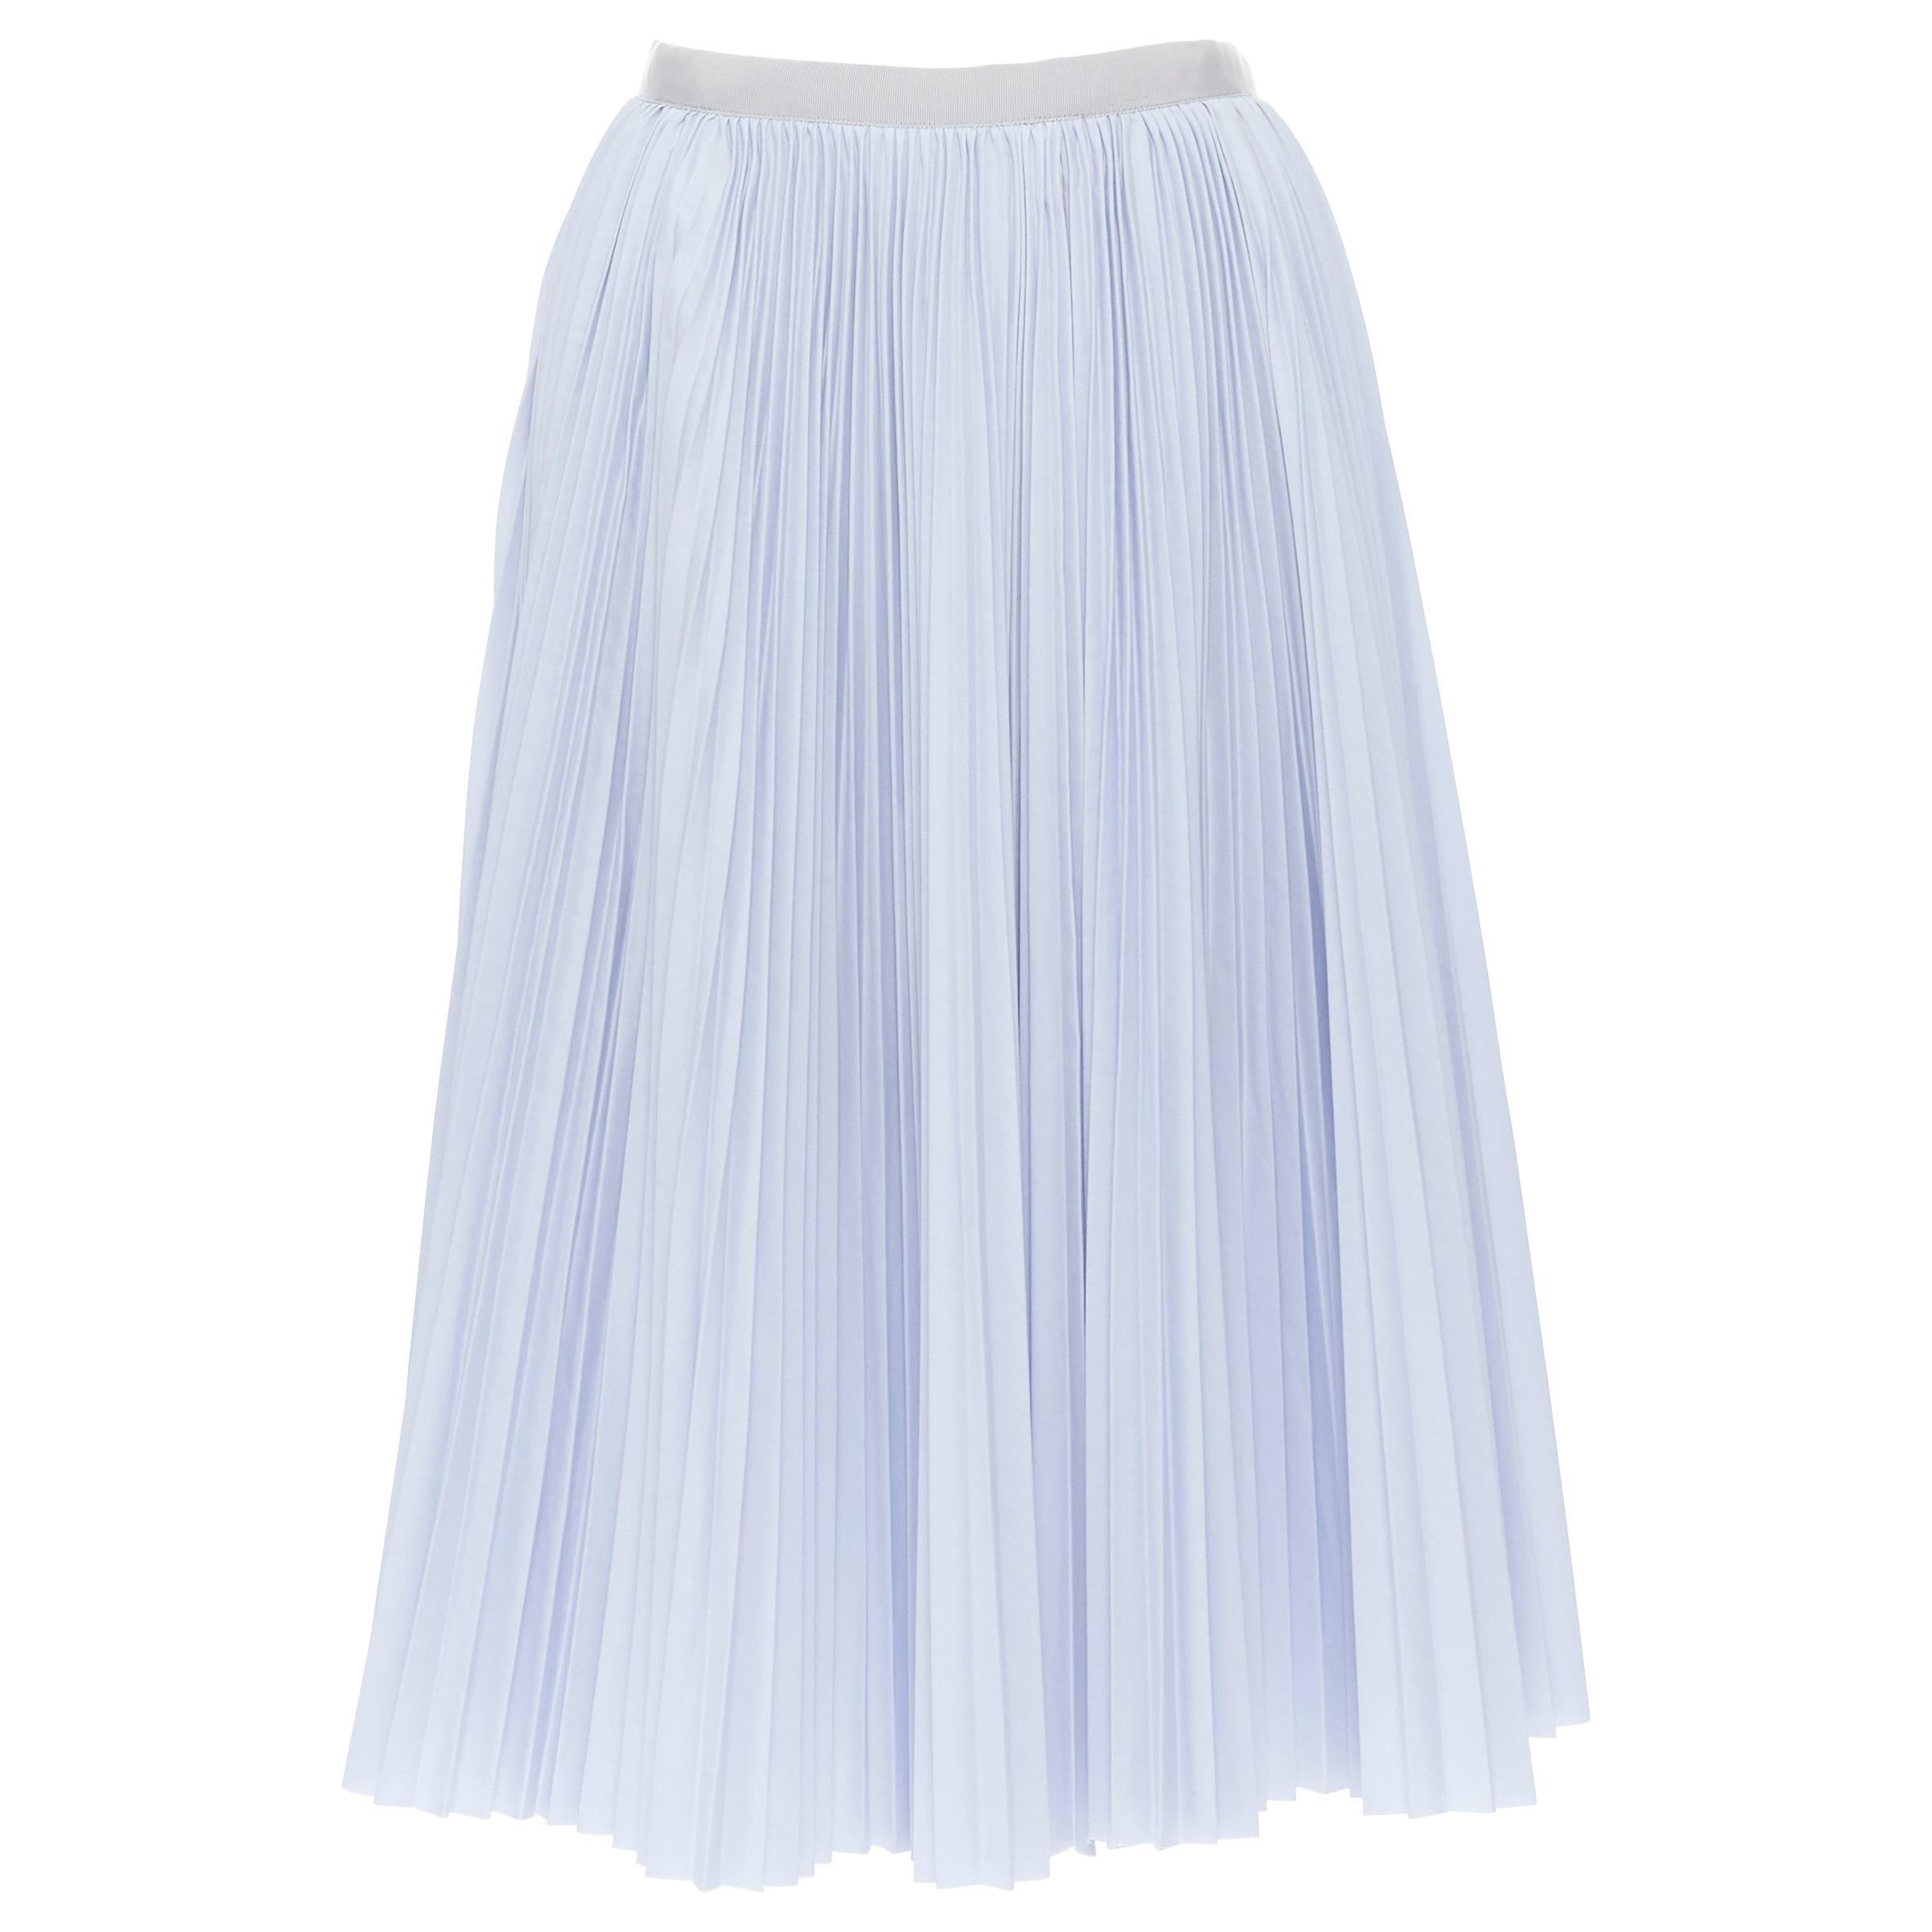 SACAI LUCK grey lace trim skirt blue cotton pleated high slit knee skirt JP1 24"